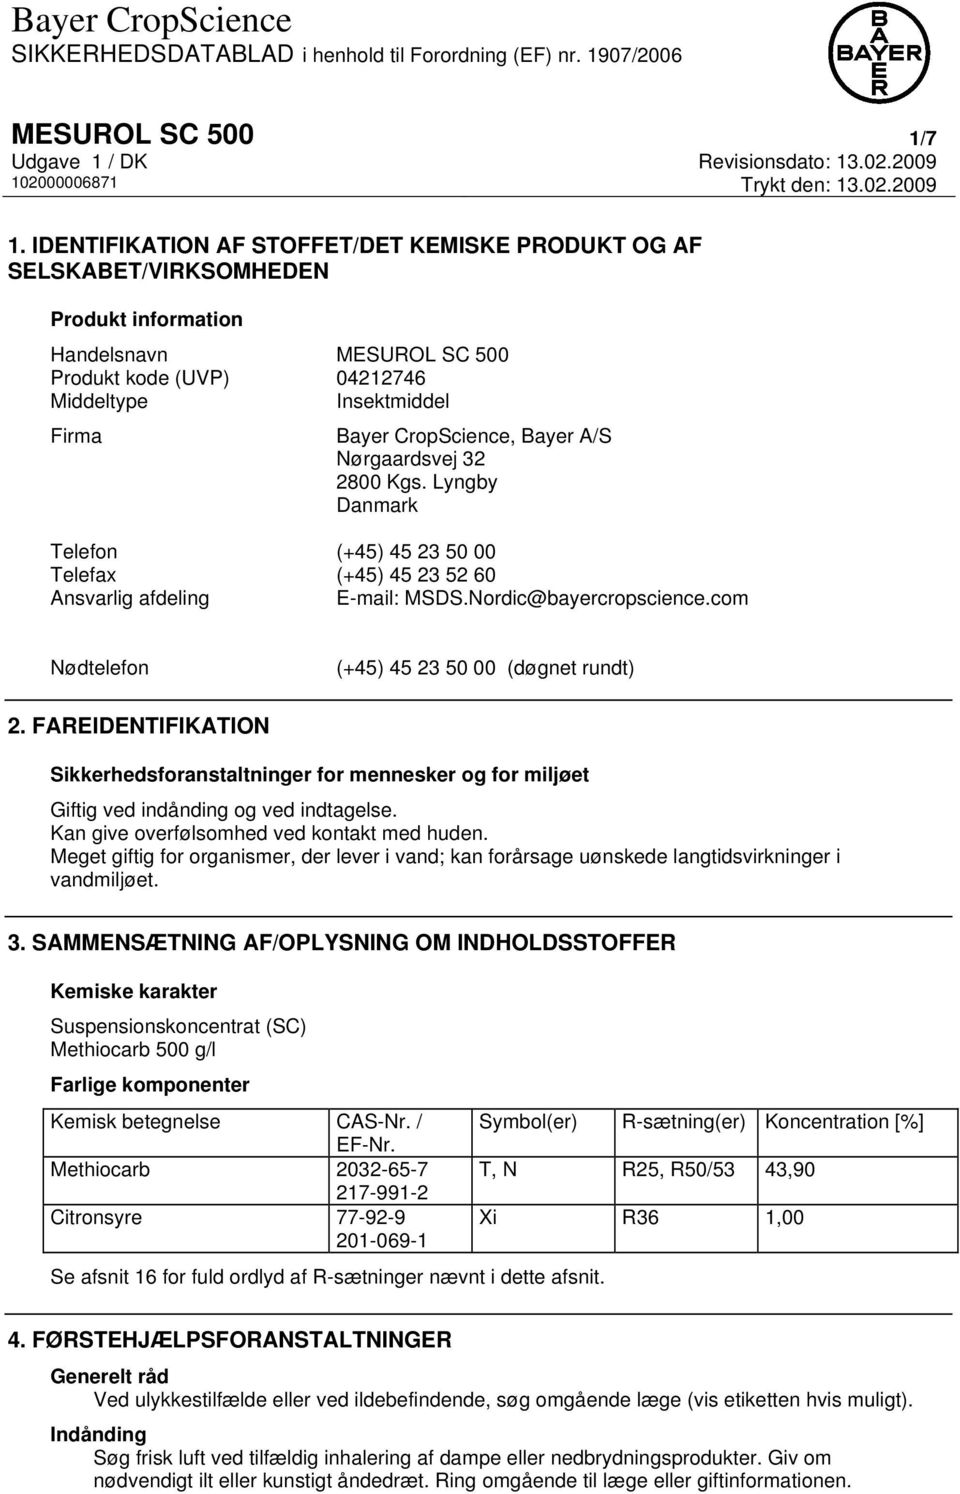 Bayer A/S Nørgaardsvej 32 2800 Kgs. Lyngby Danmark Telefon (+45) 45 23 50 00 Telefax (+45) 45 23 52 60 Ansvarlig afdeling E-mail: MSDS.Nordic@bayercropscience.